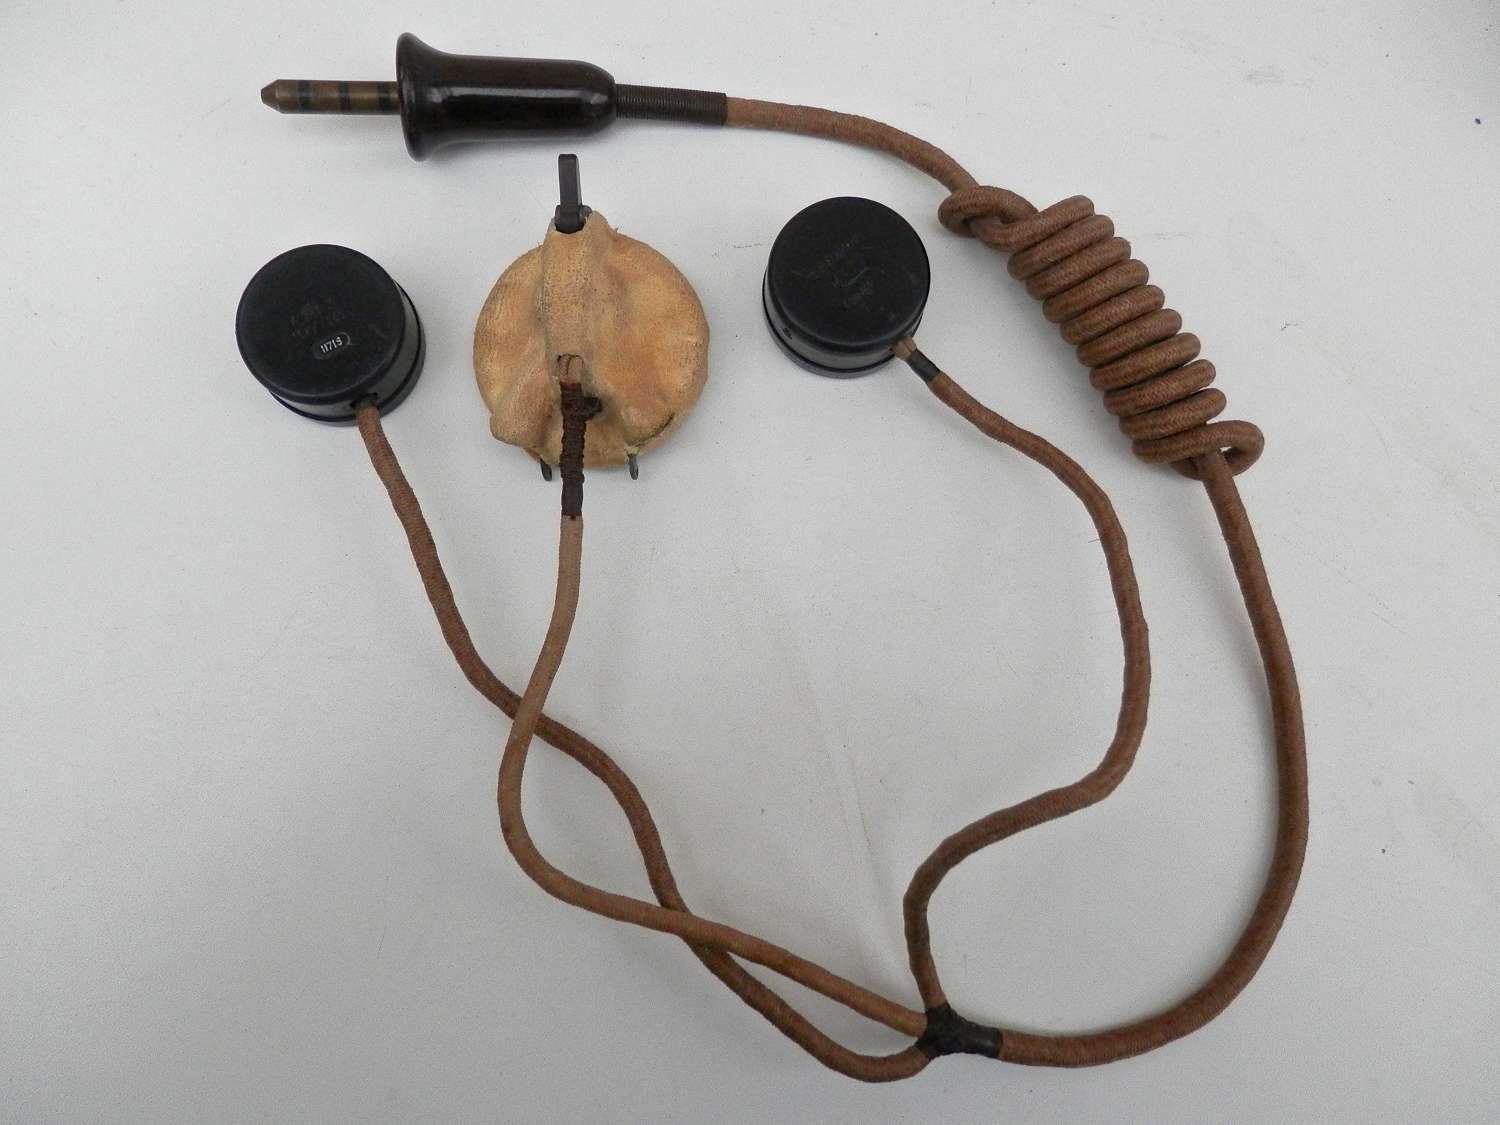 RAF type E microphone and wiring loom